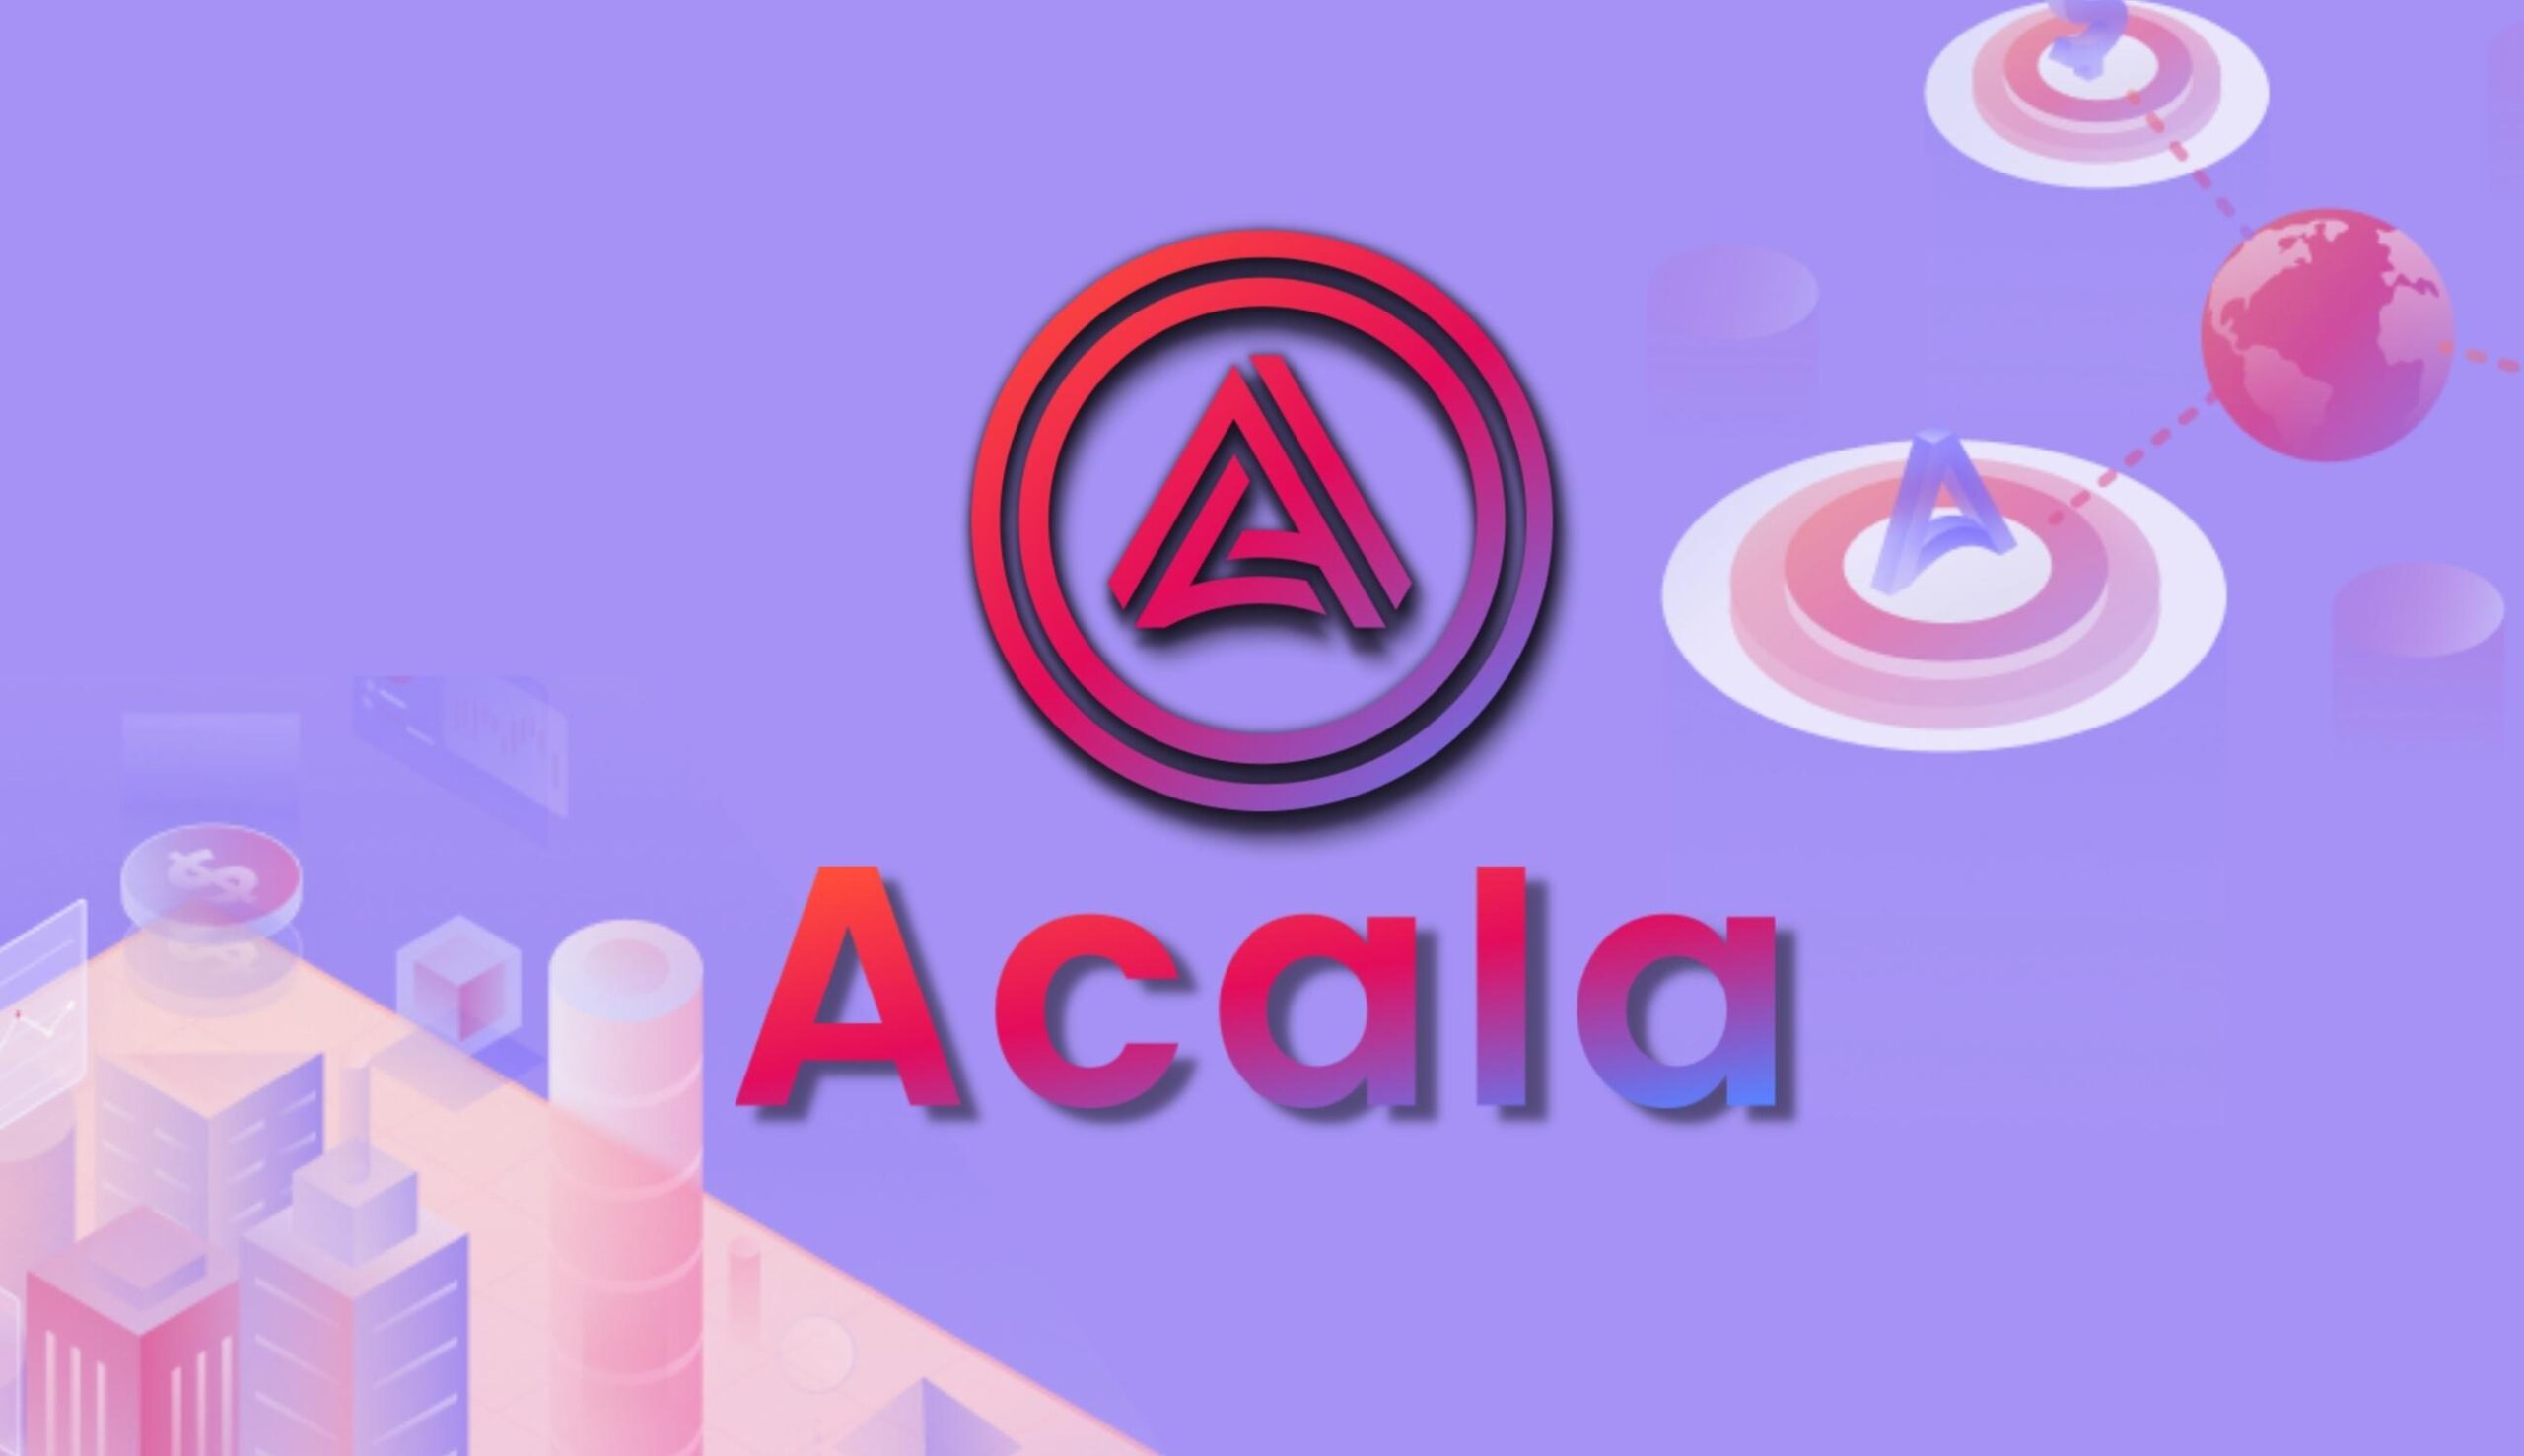 مزایای شبکه Acala